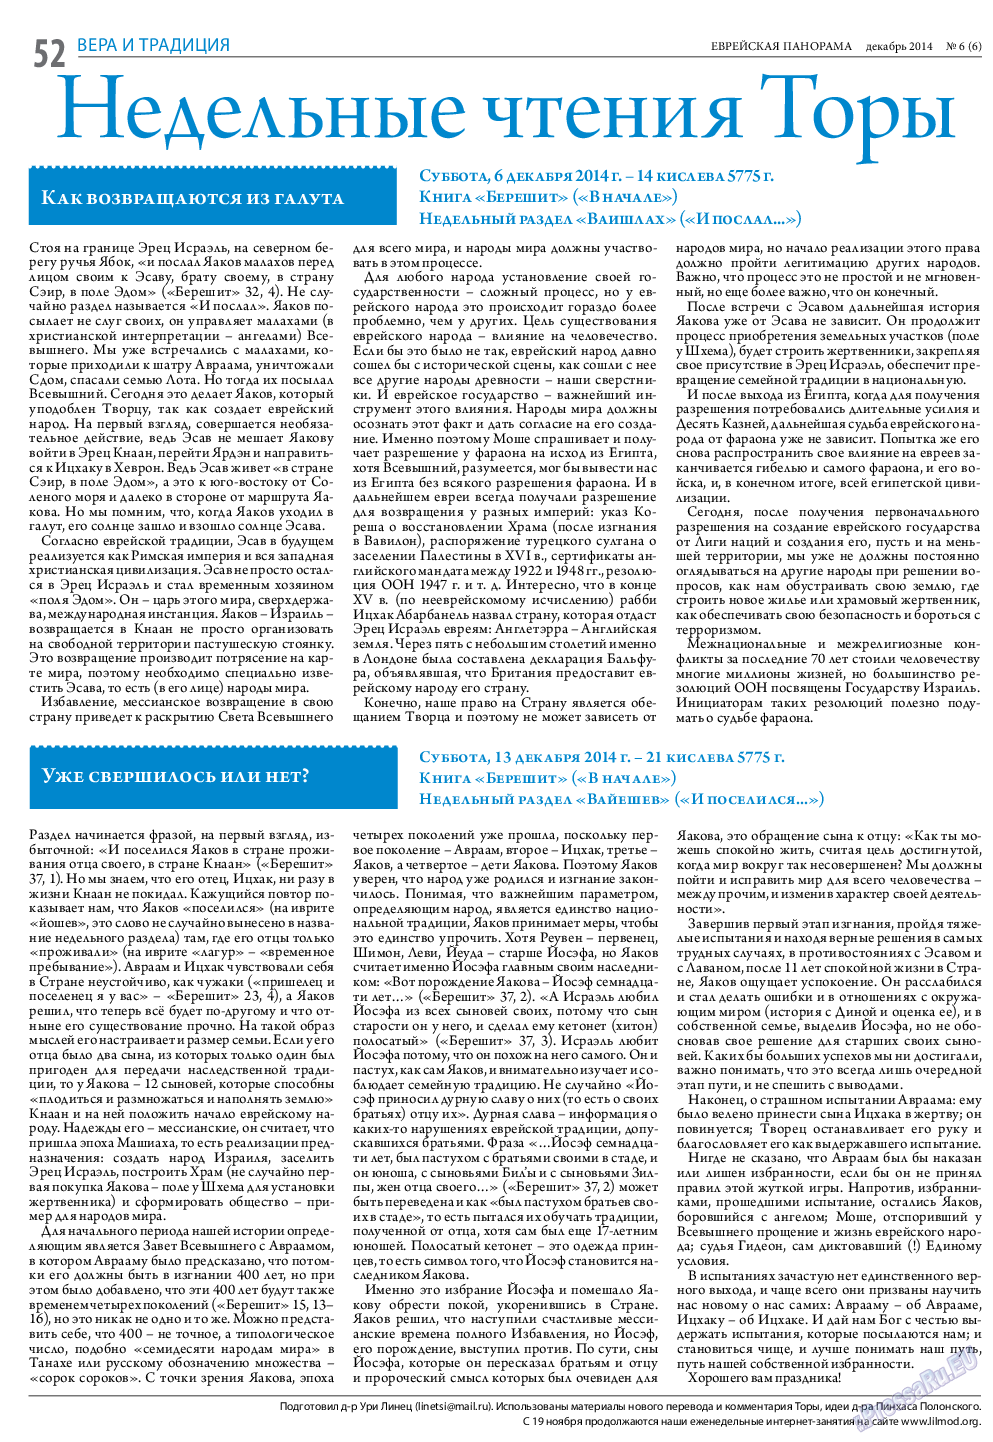 Еврейская панорама, газета. 2014 №6 стр.52